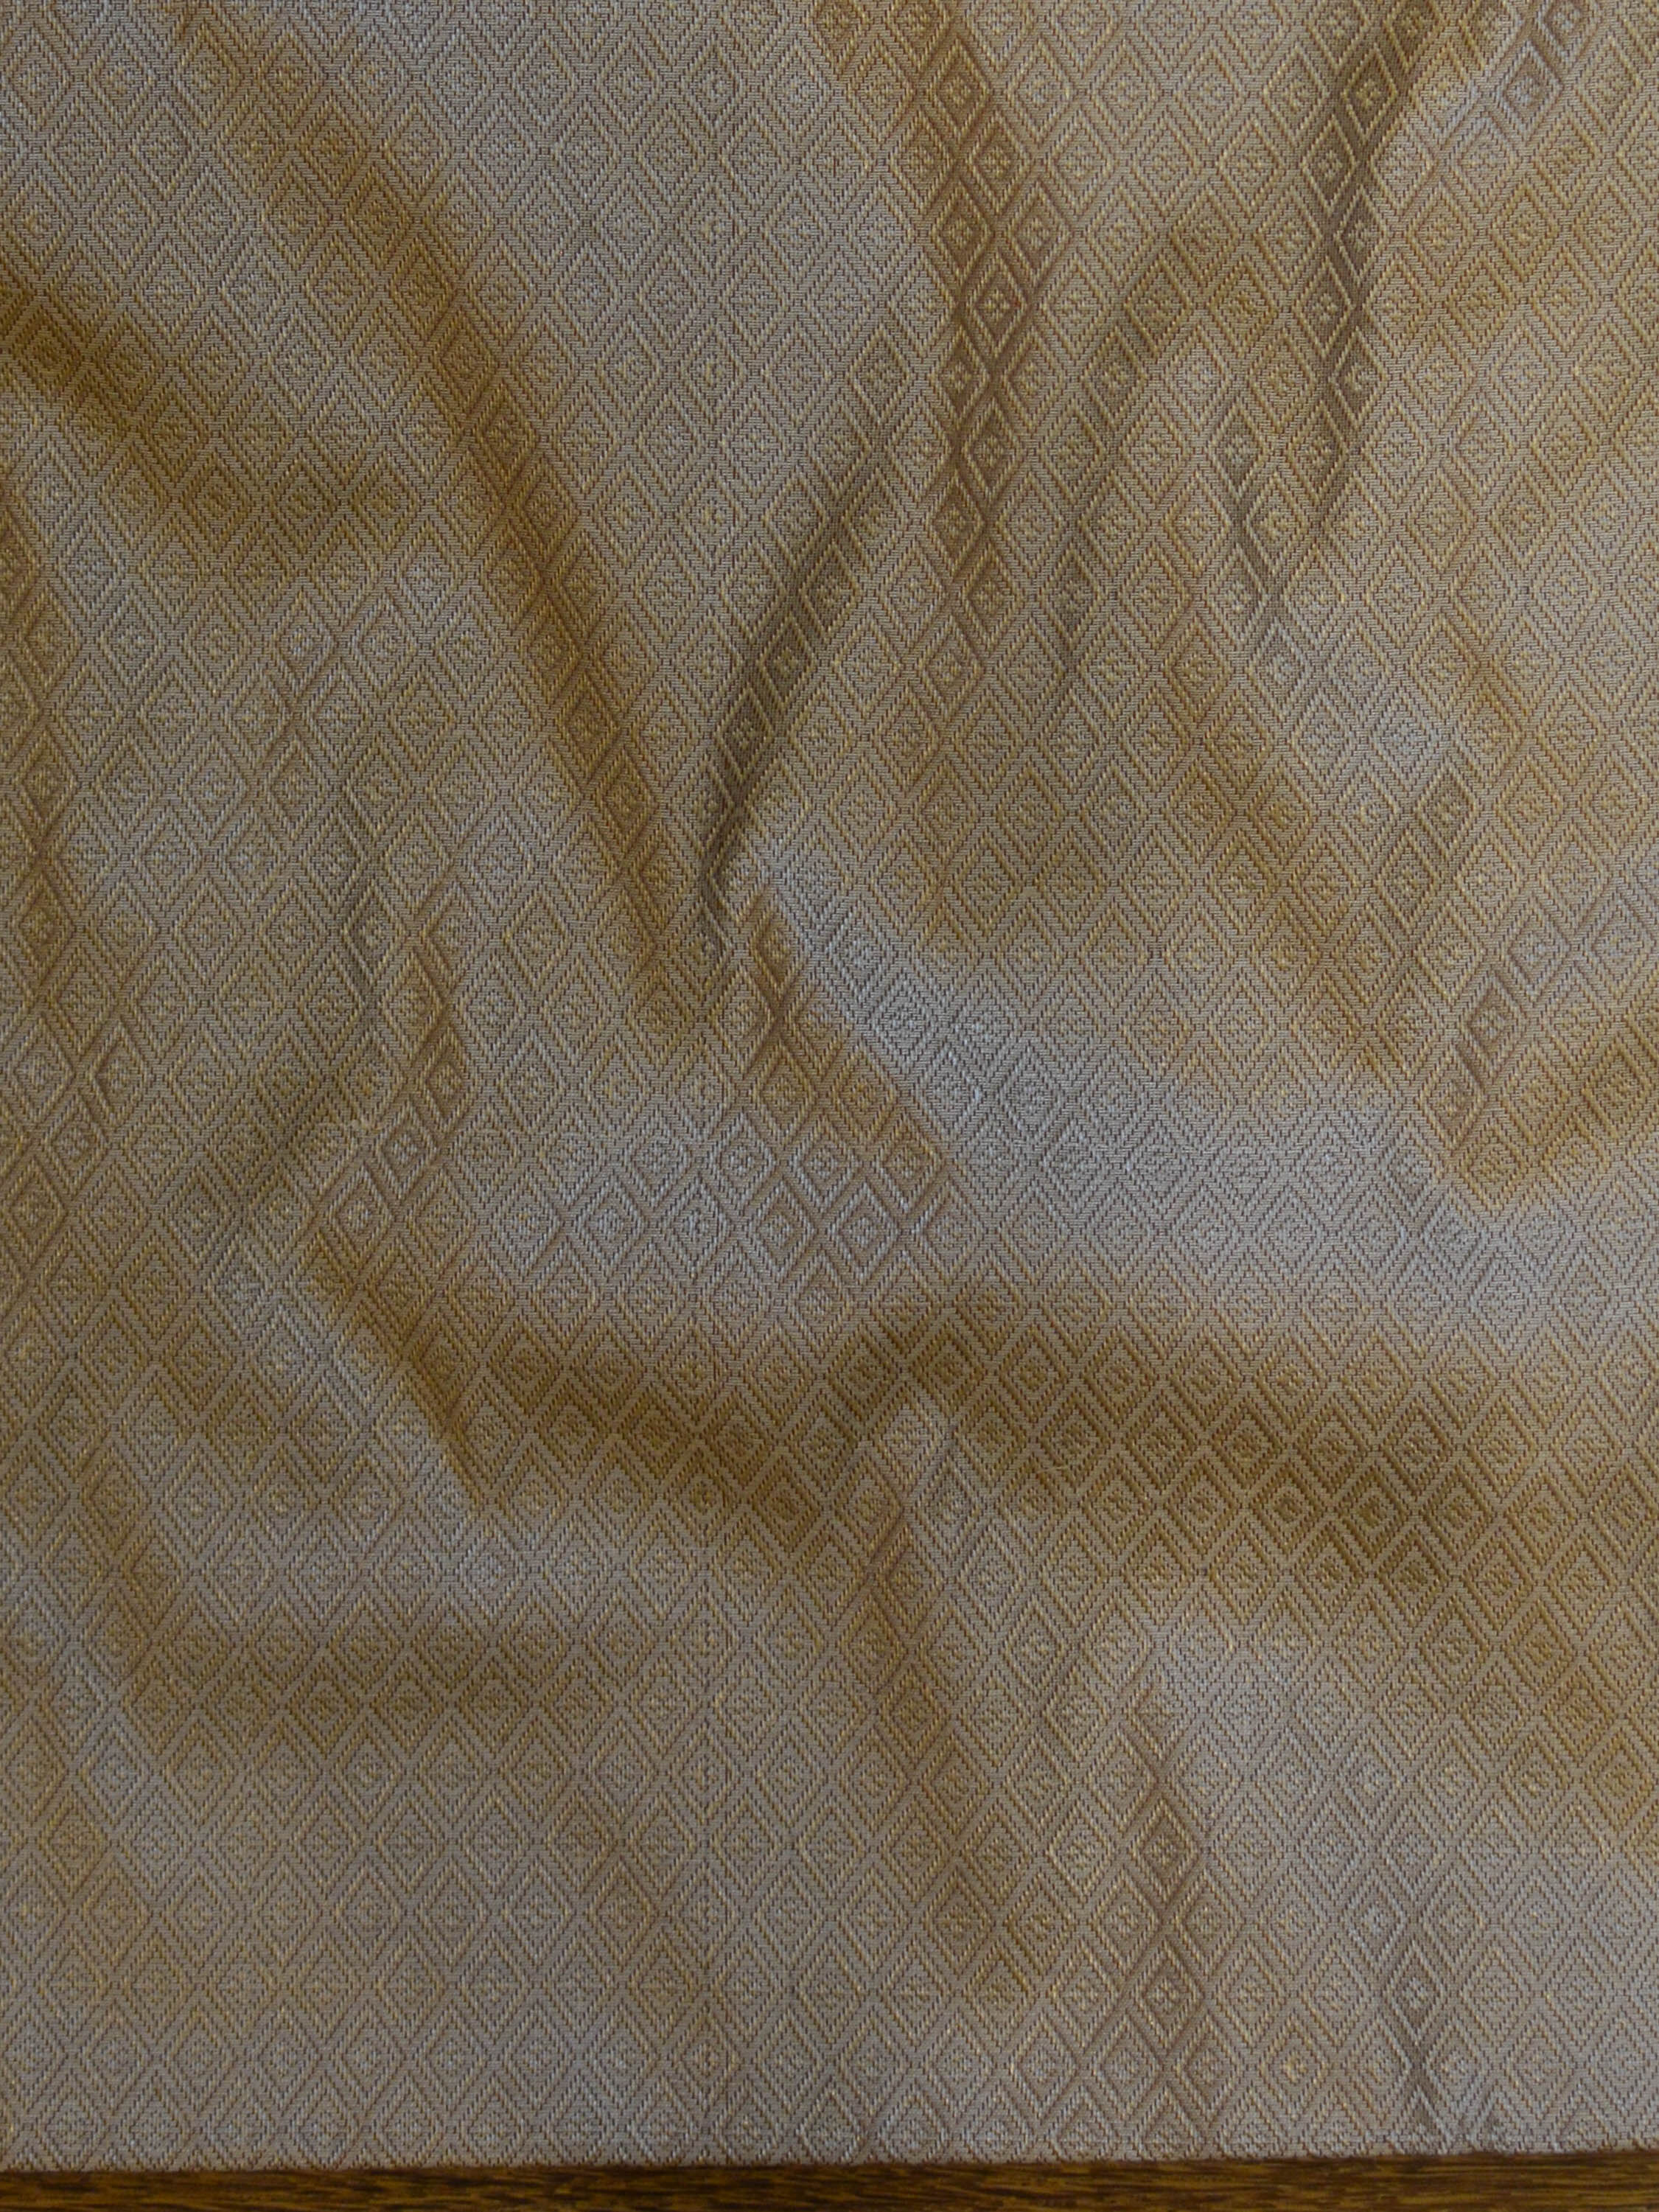 Banarasee Salwar Kameez Cotton Silk Resham Buti Woven Fabric-Beige